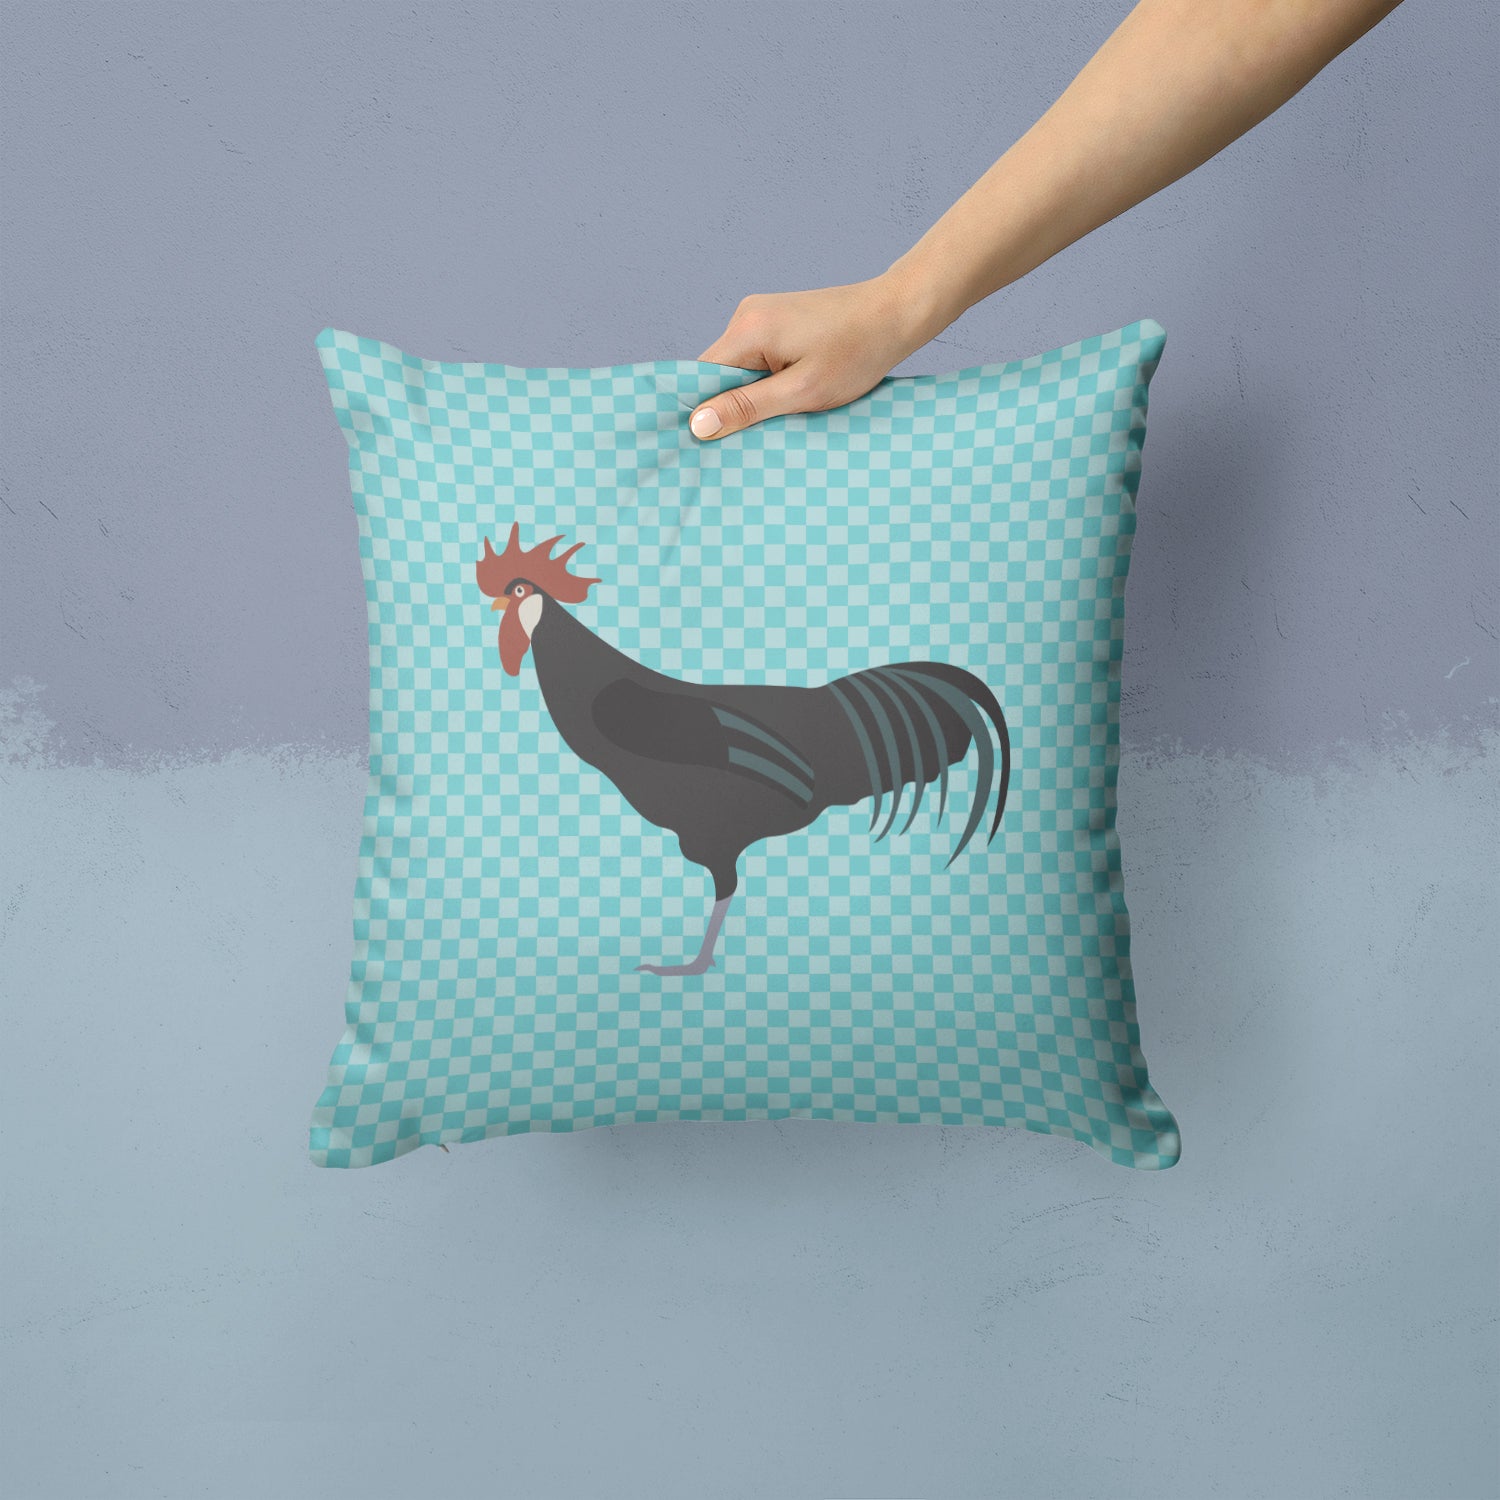 Minorca Ctalalan Chicken Blue Check Fabric Decorative Pillow BB8015PW1414 - the-store.com